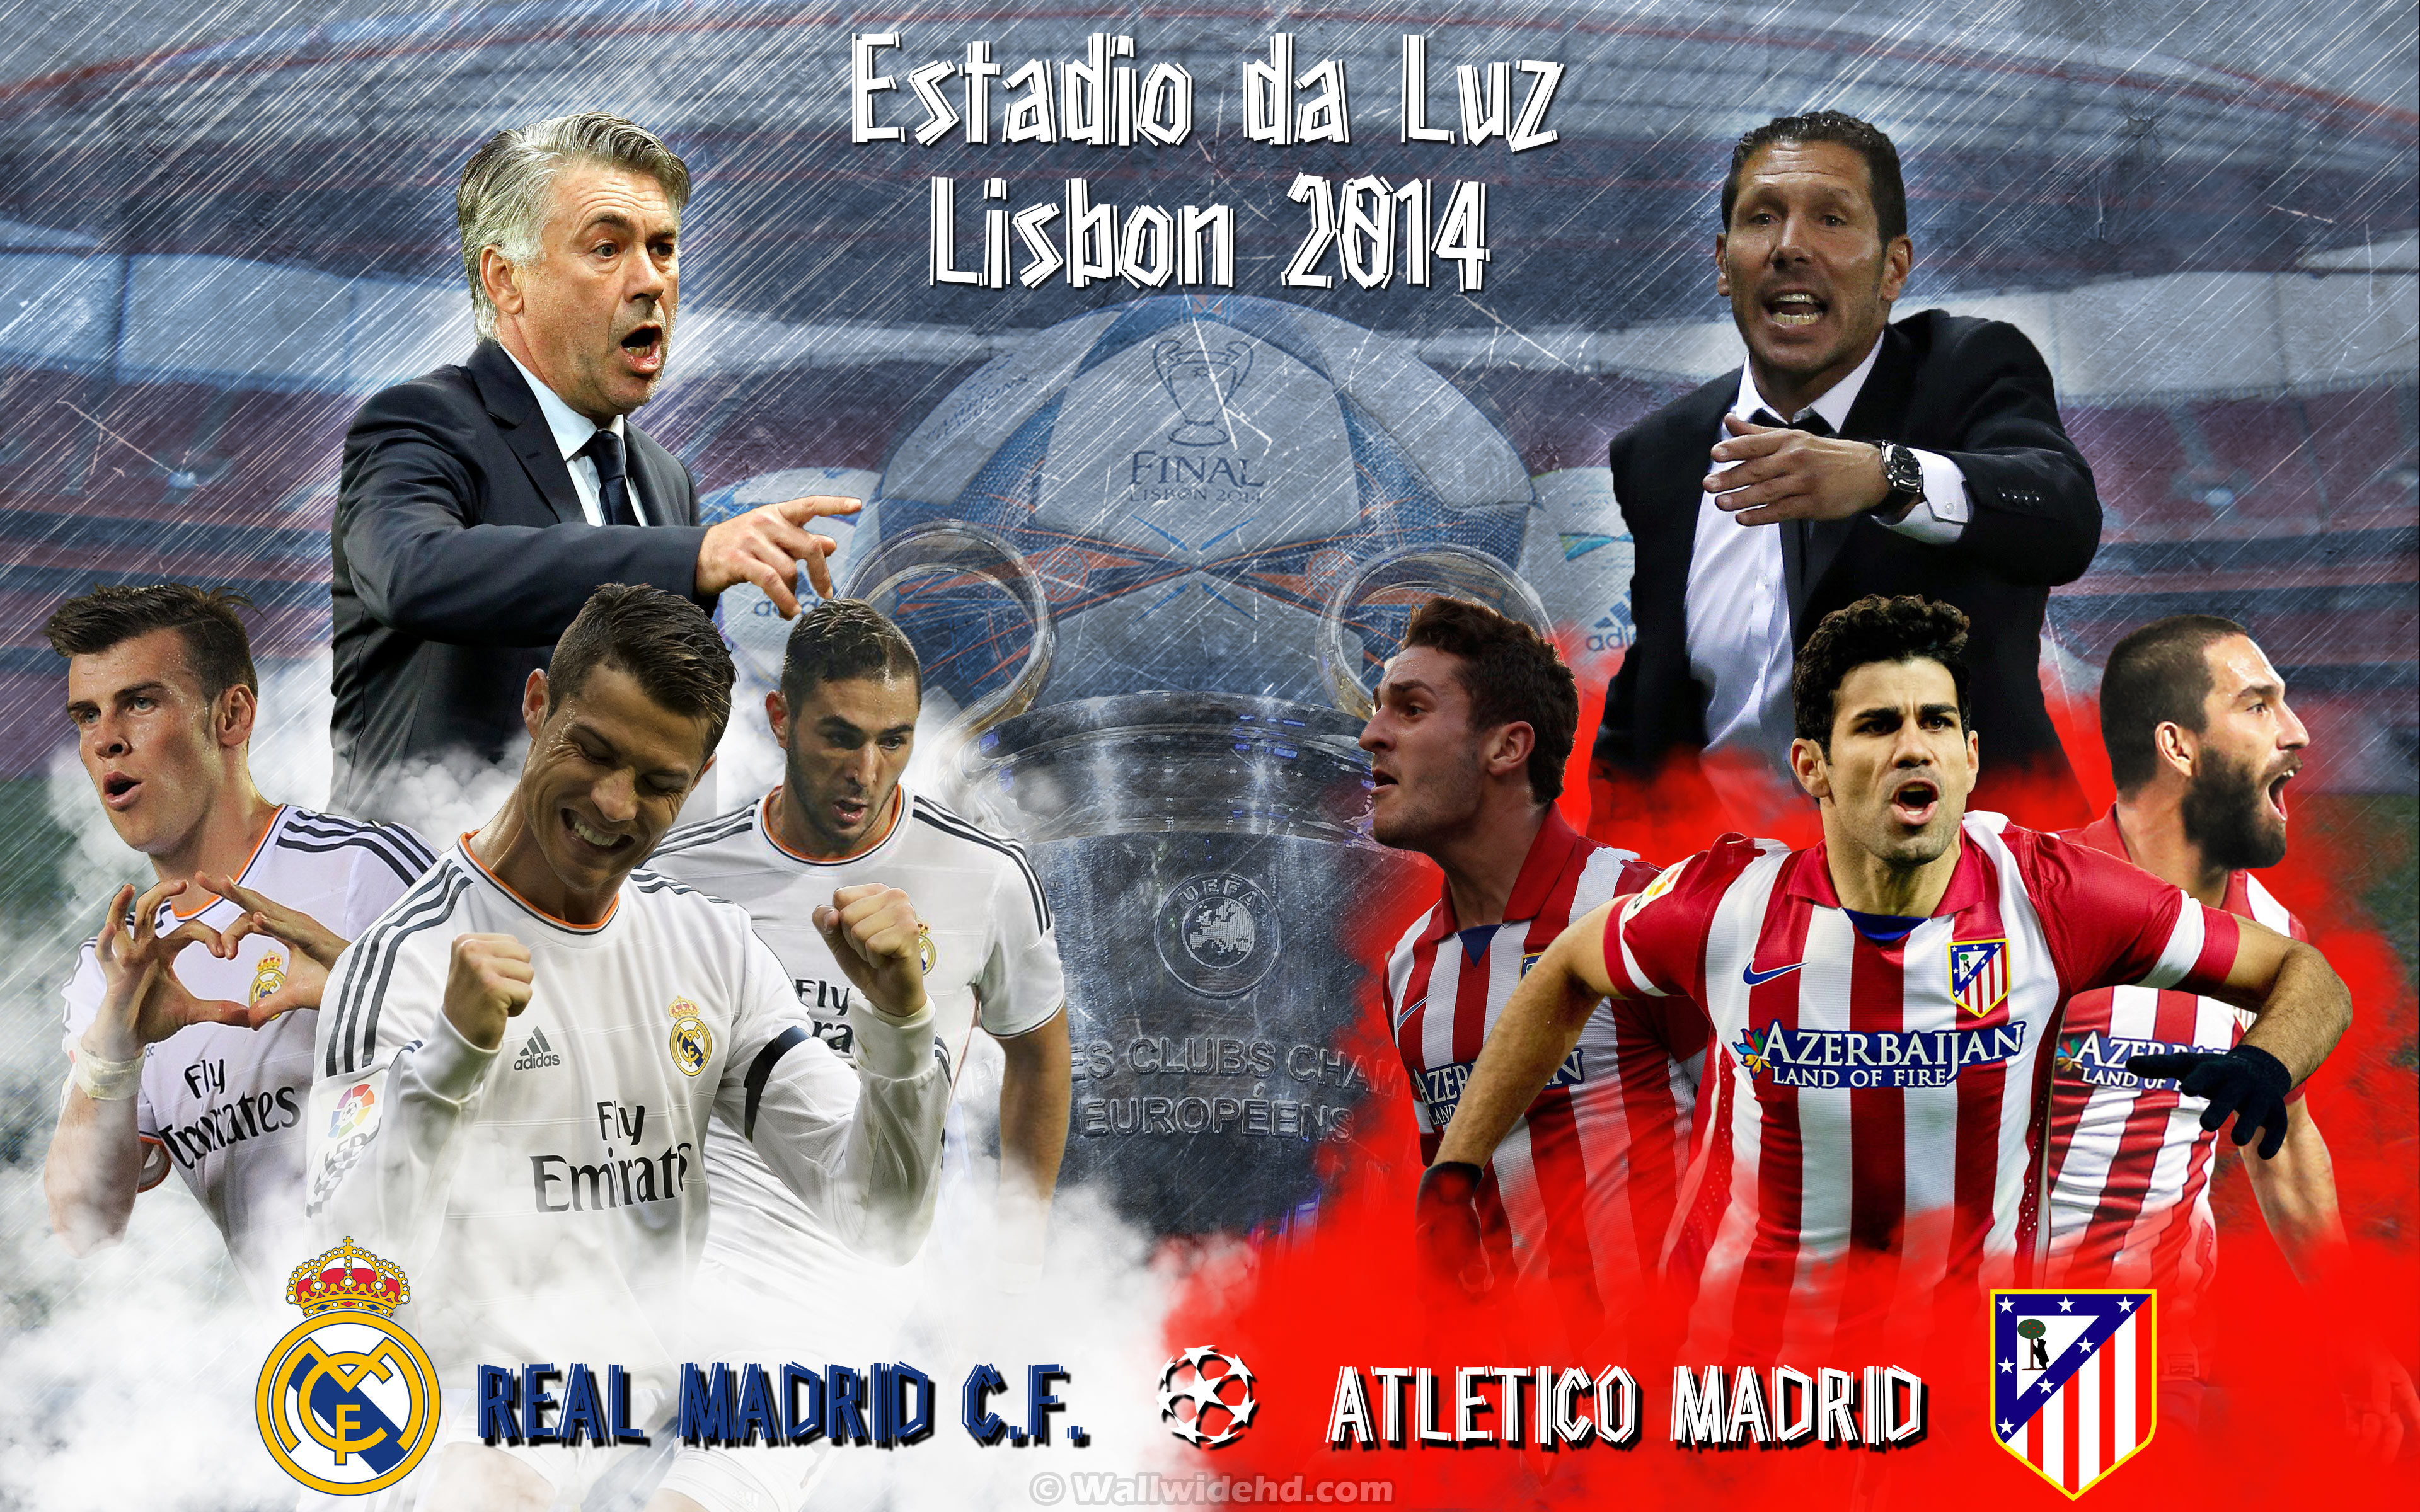 Real-Madrid-Vs-Atletico-Madrid-Champions-League-Final-Lisbon-2014 - Under The Cosh